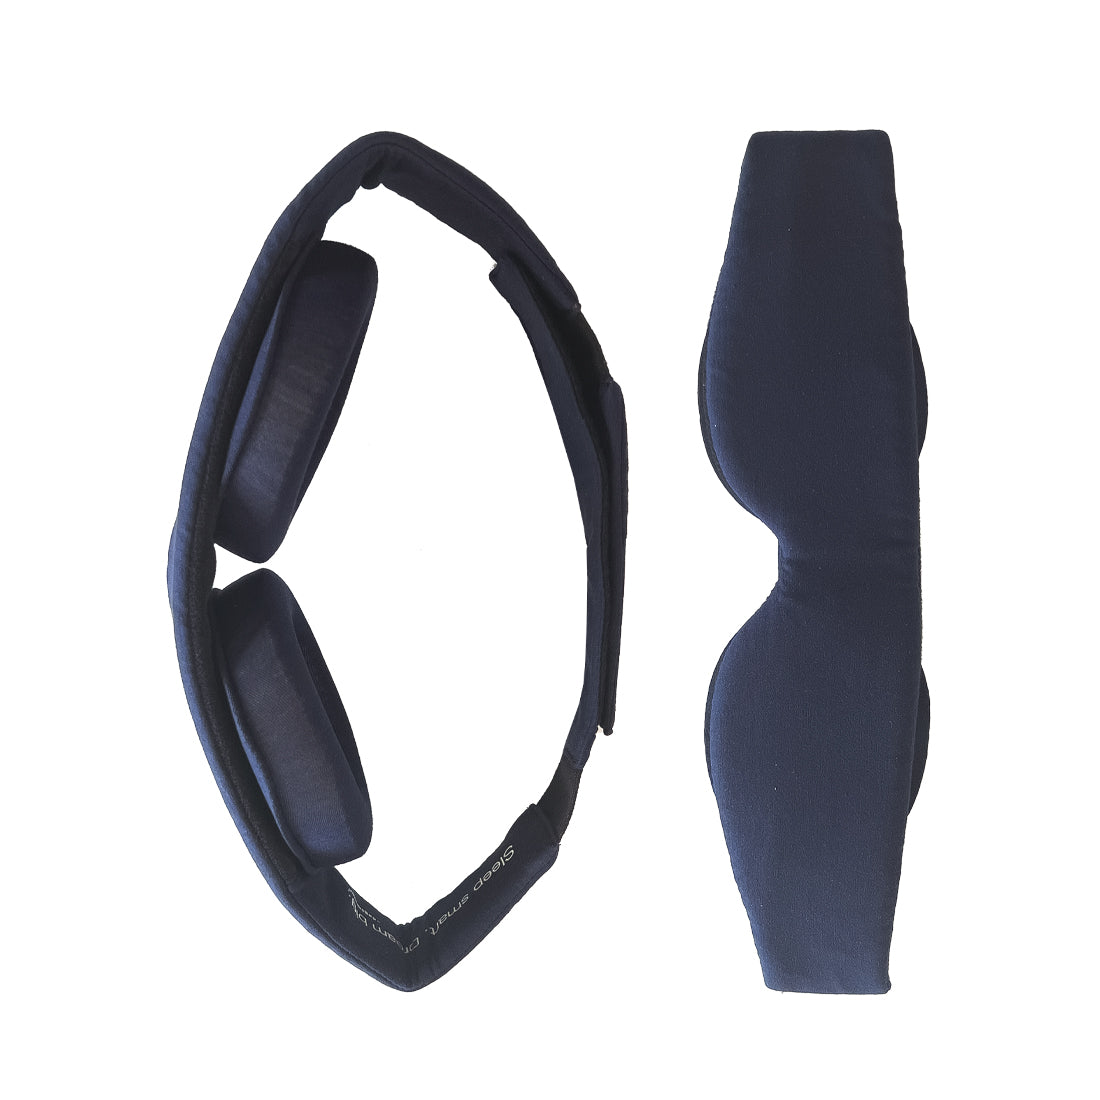 Cooling blackout sleep mask || Navy blue